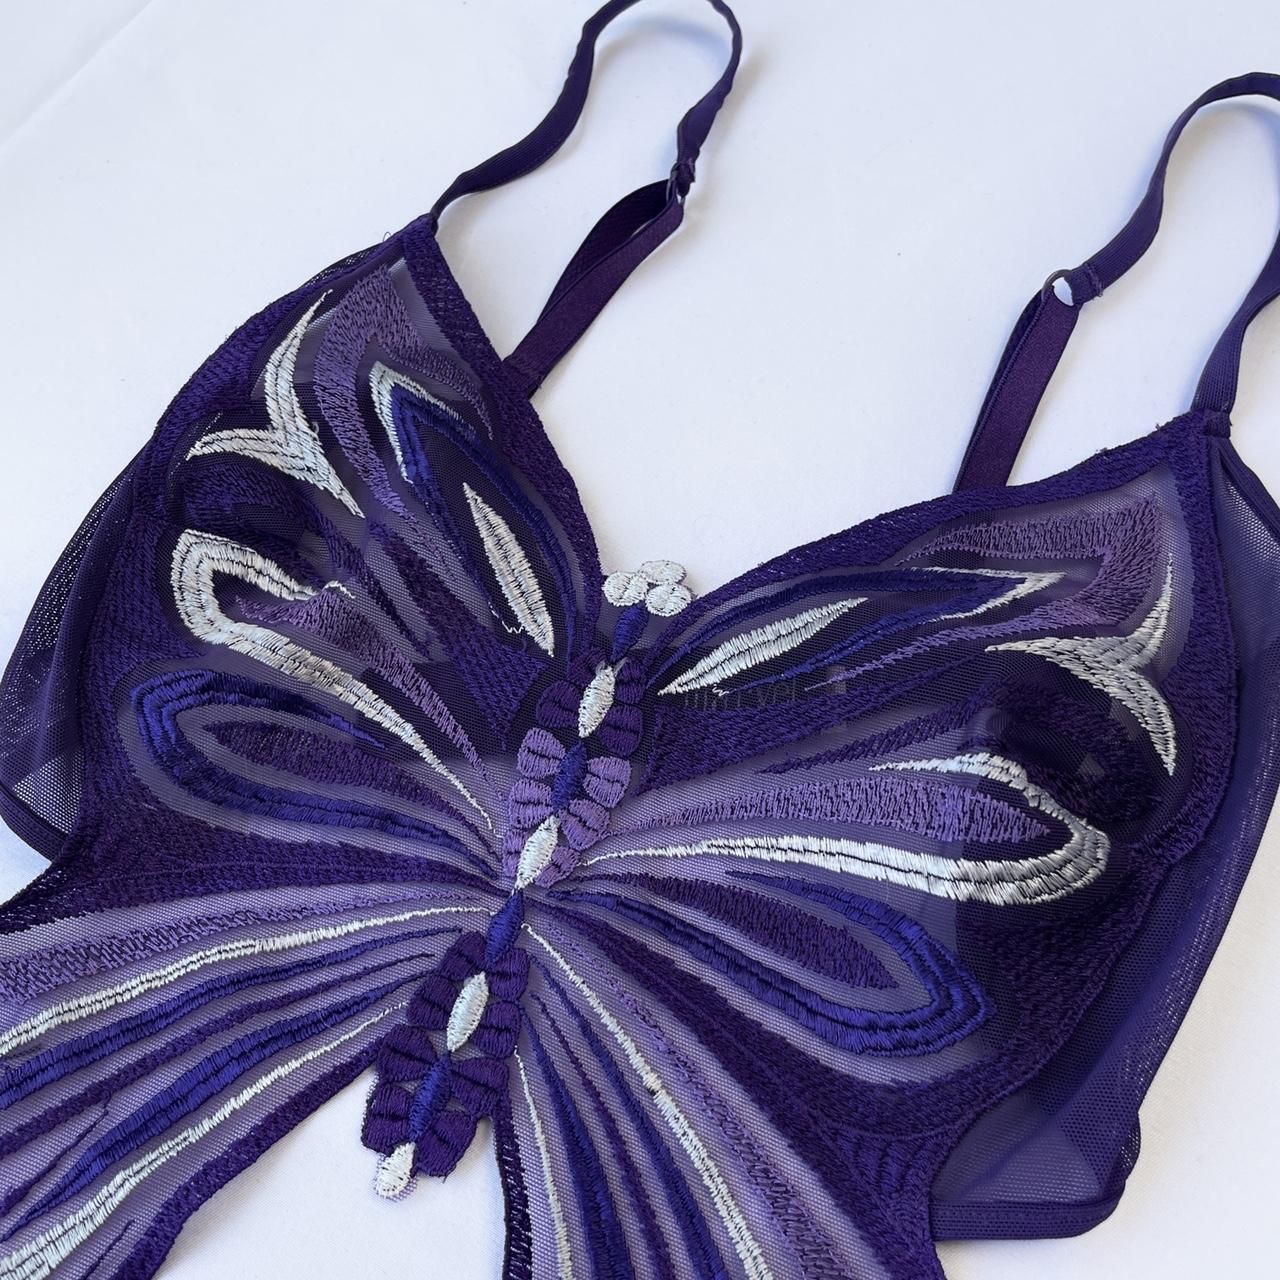 Stunning Violet Butterfly La Perla Bodysuit 🦋 A... - Depop